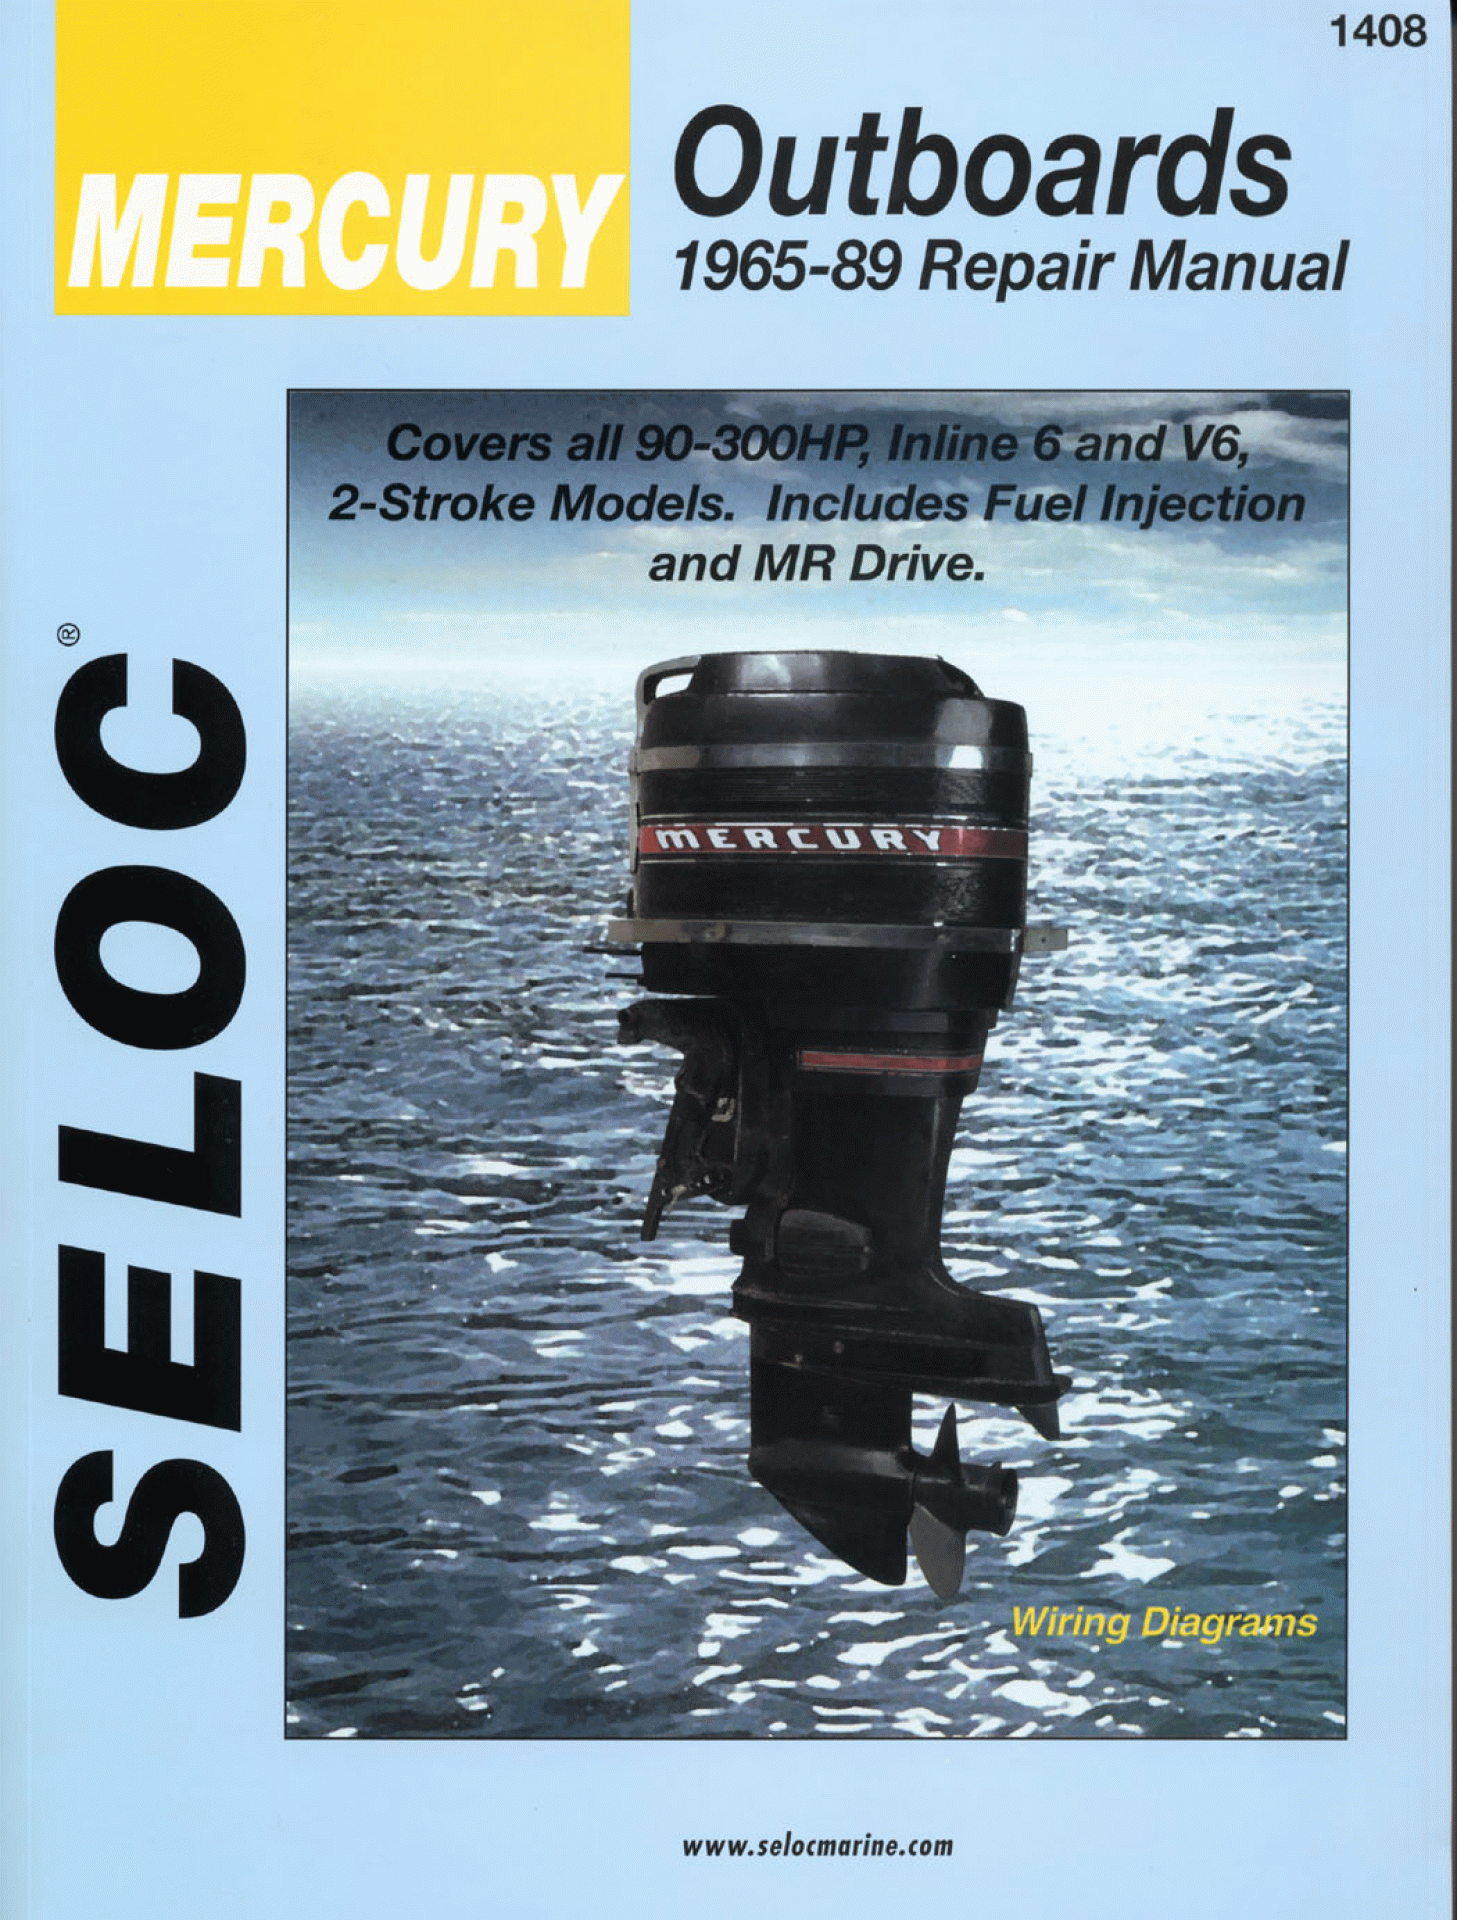 SELOC PUBLISHING | 18-01408 | REPAIR MANUAL Mercury Outboards 6 Cyl 1965-89